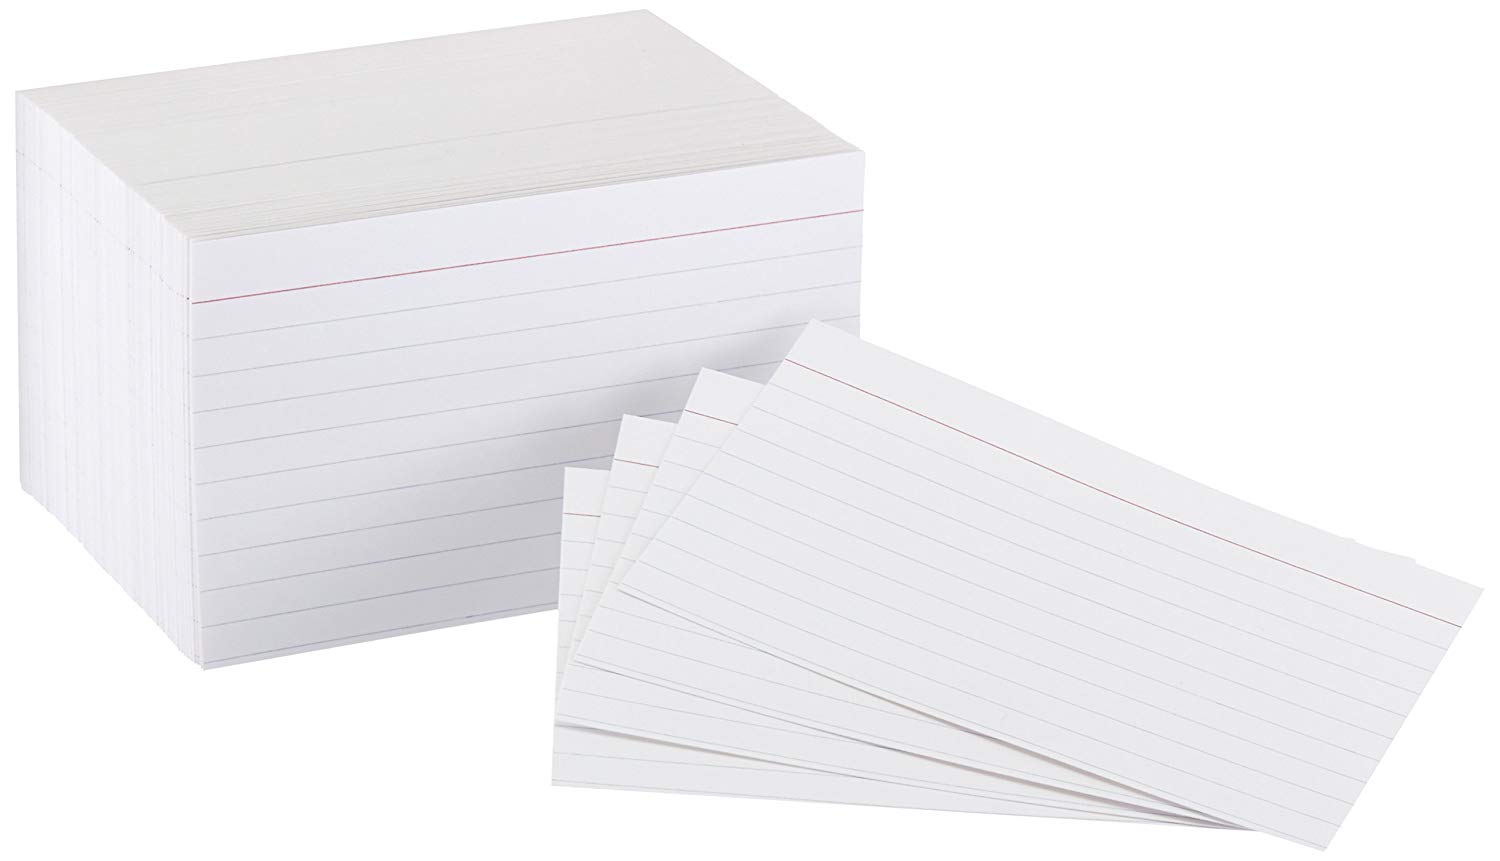 Tarjetas de índice forradas con regla de peso pesado de blanco tarjeta de 3x5 pulgadas de 300 unidades.